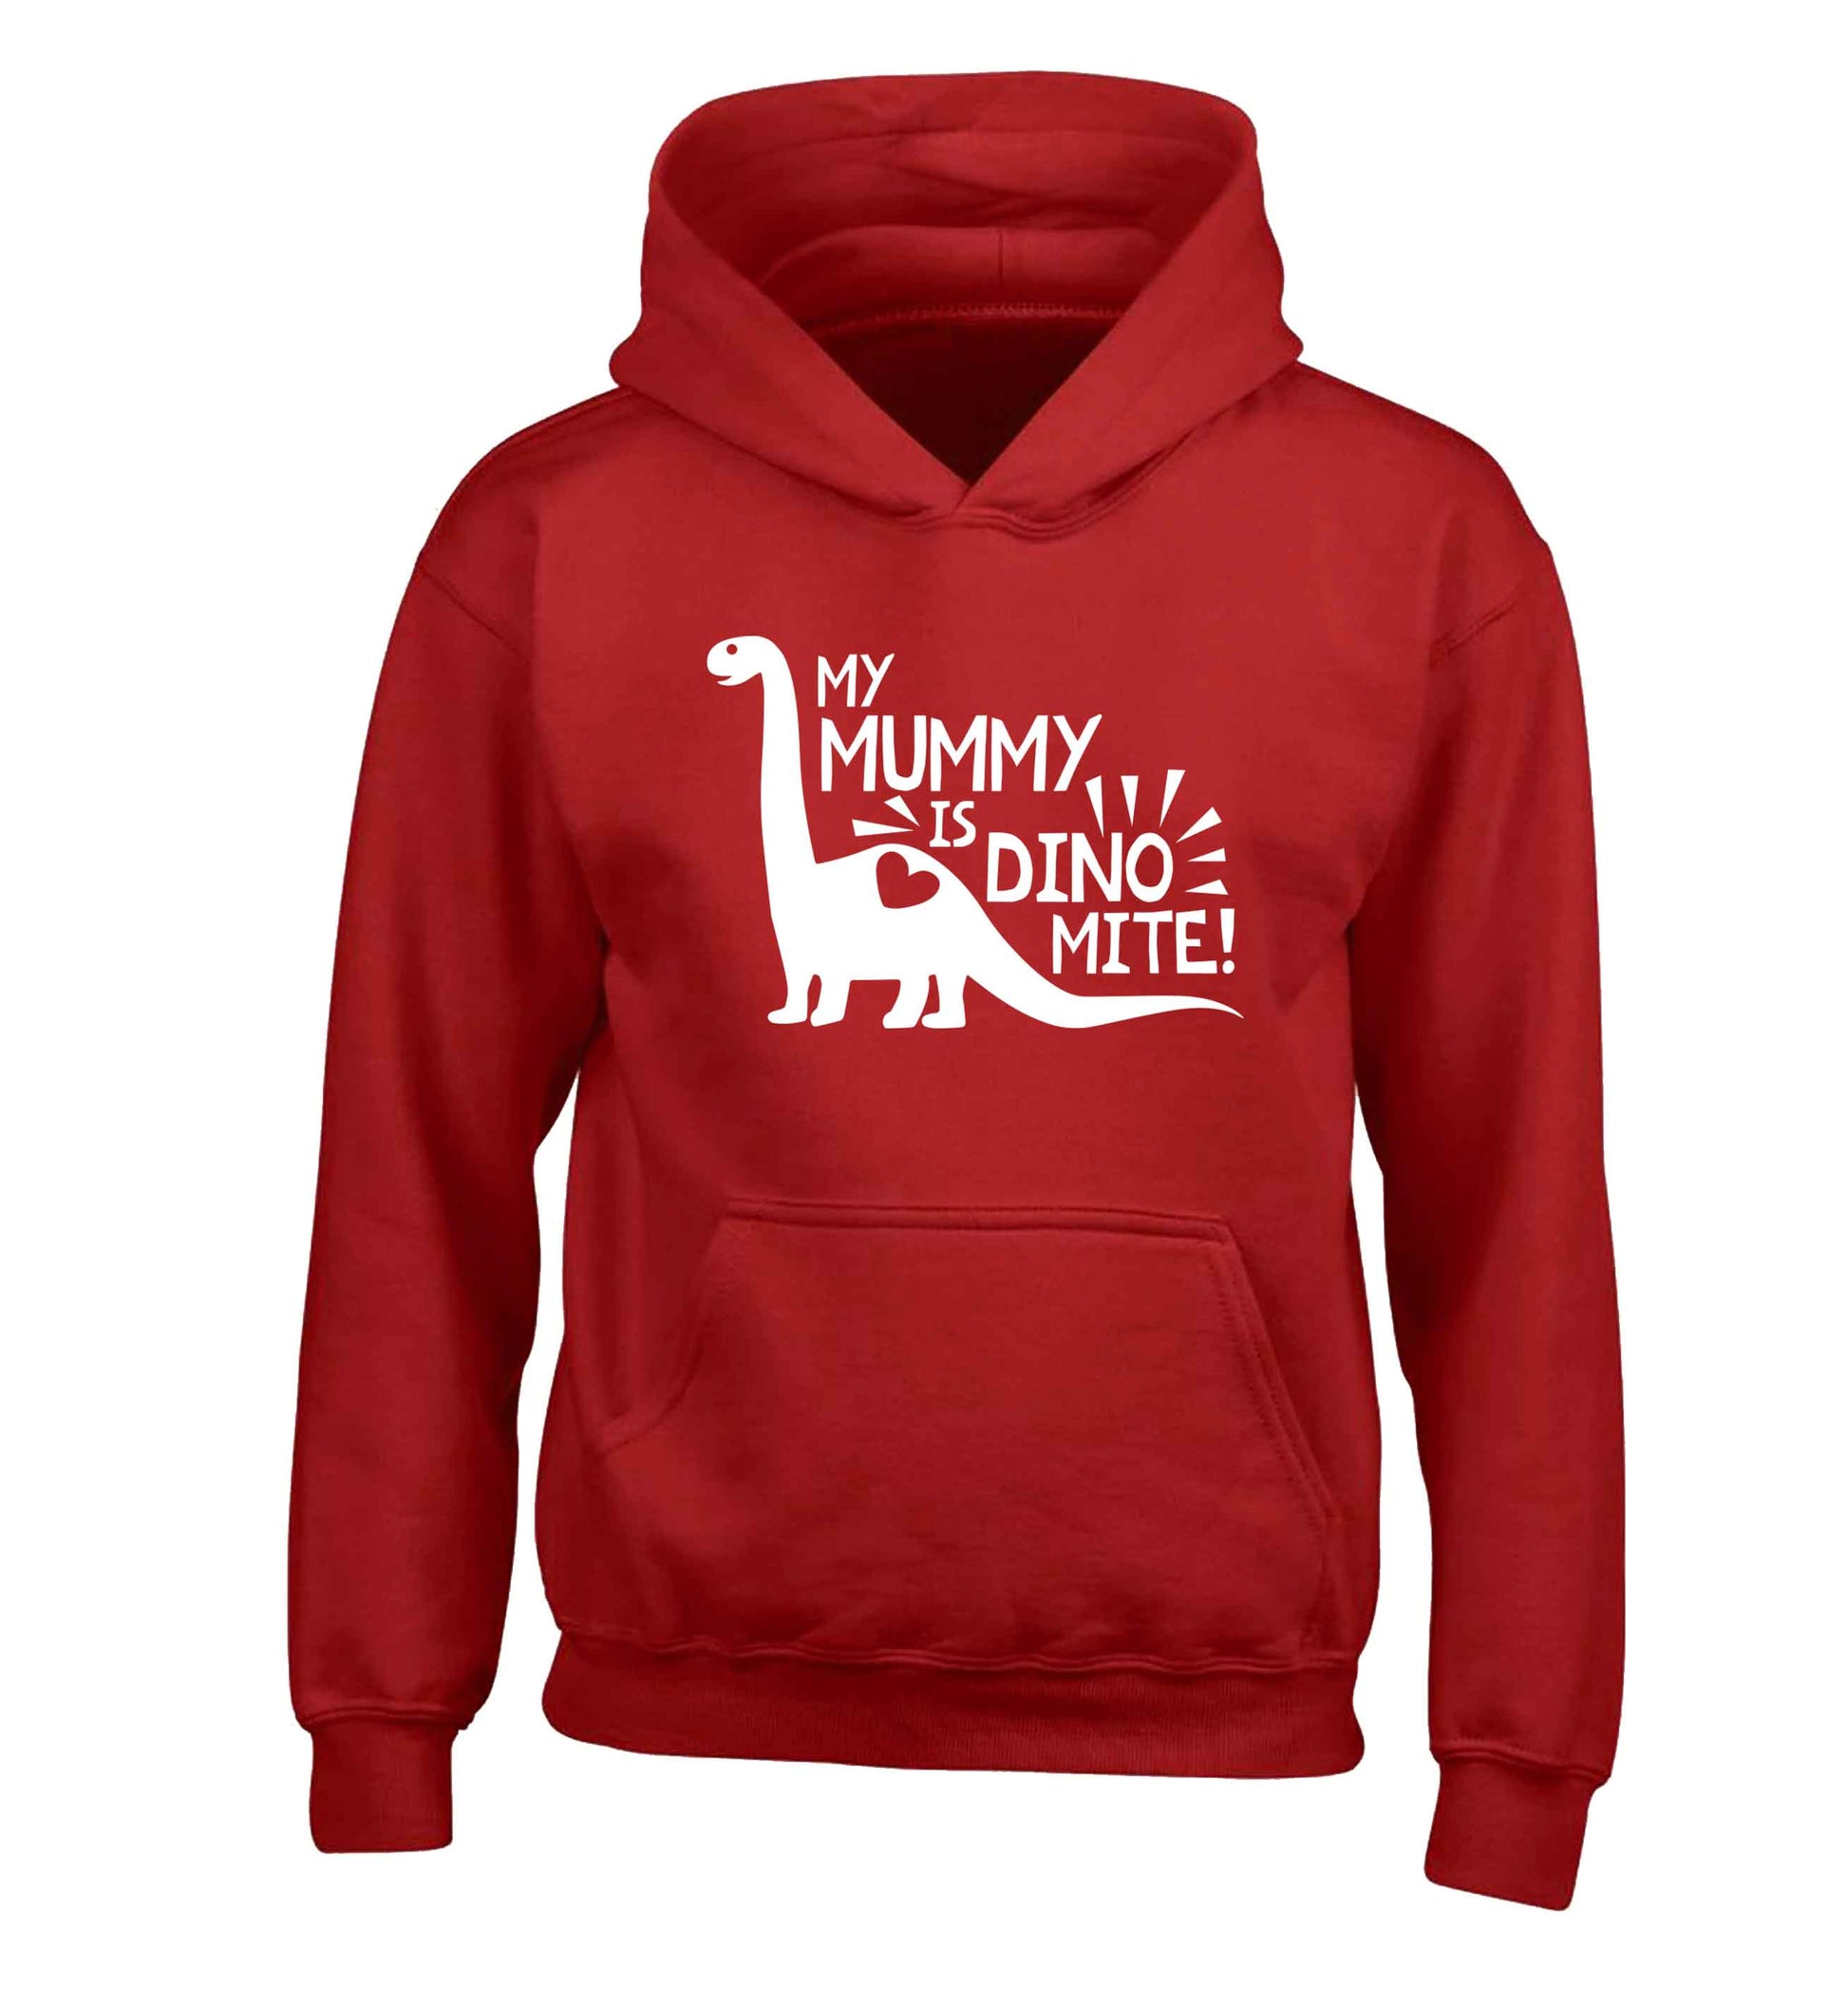 My mummy is dinomite children's red hoodie 12-13 Years